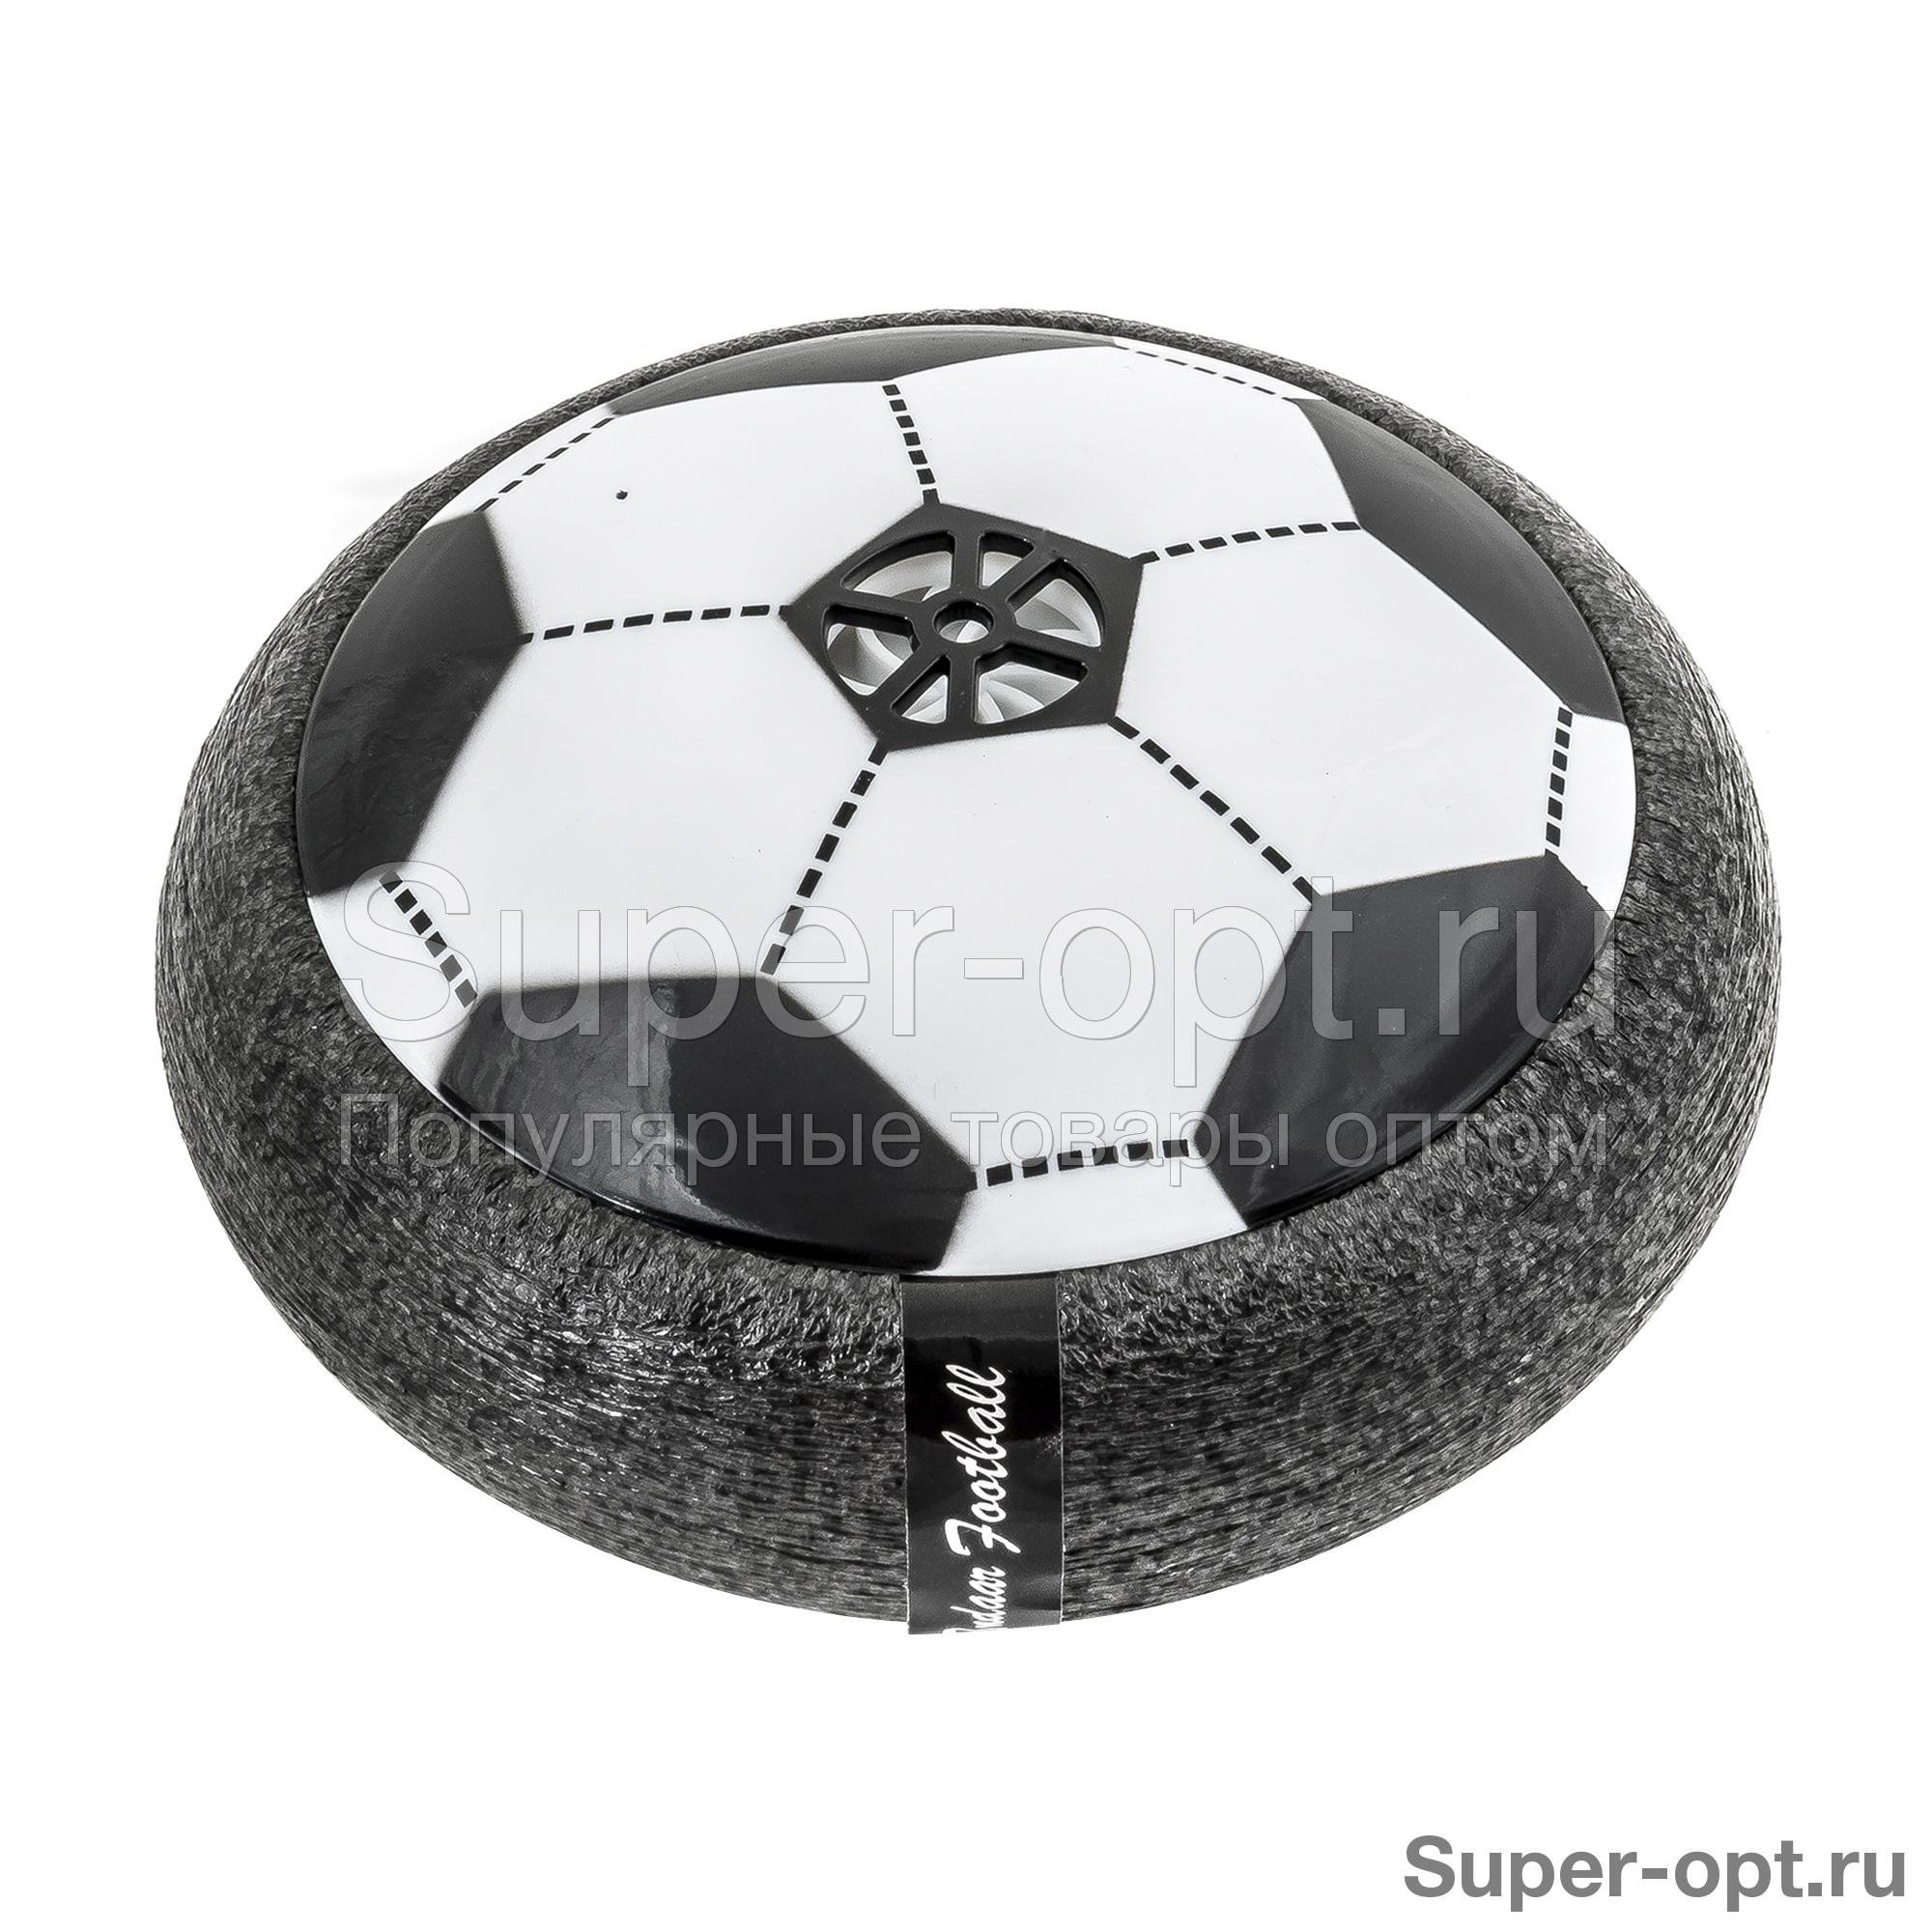 Футбольный мяч для дома Football Air Power